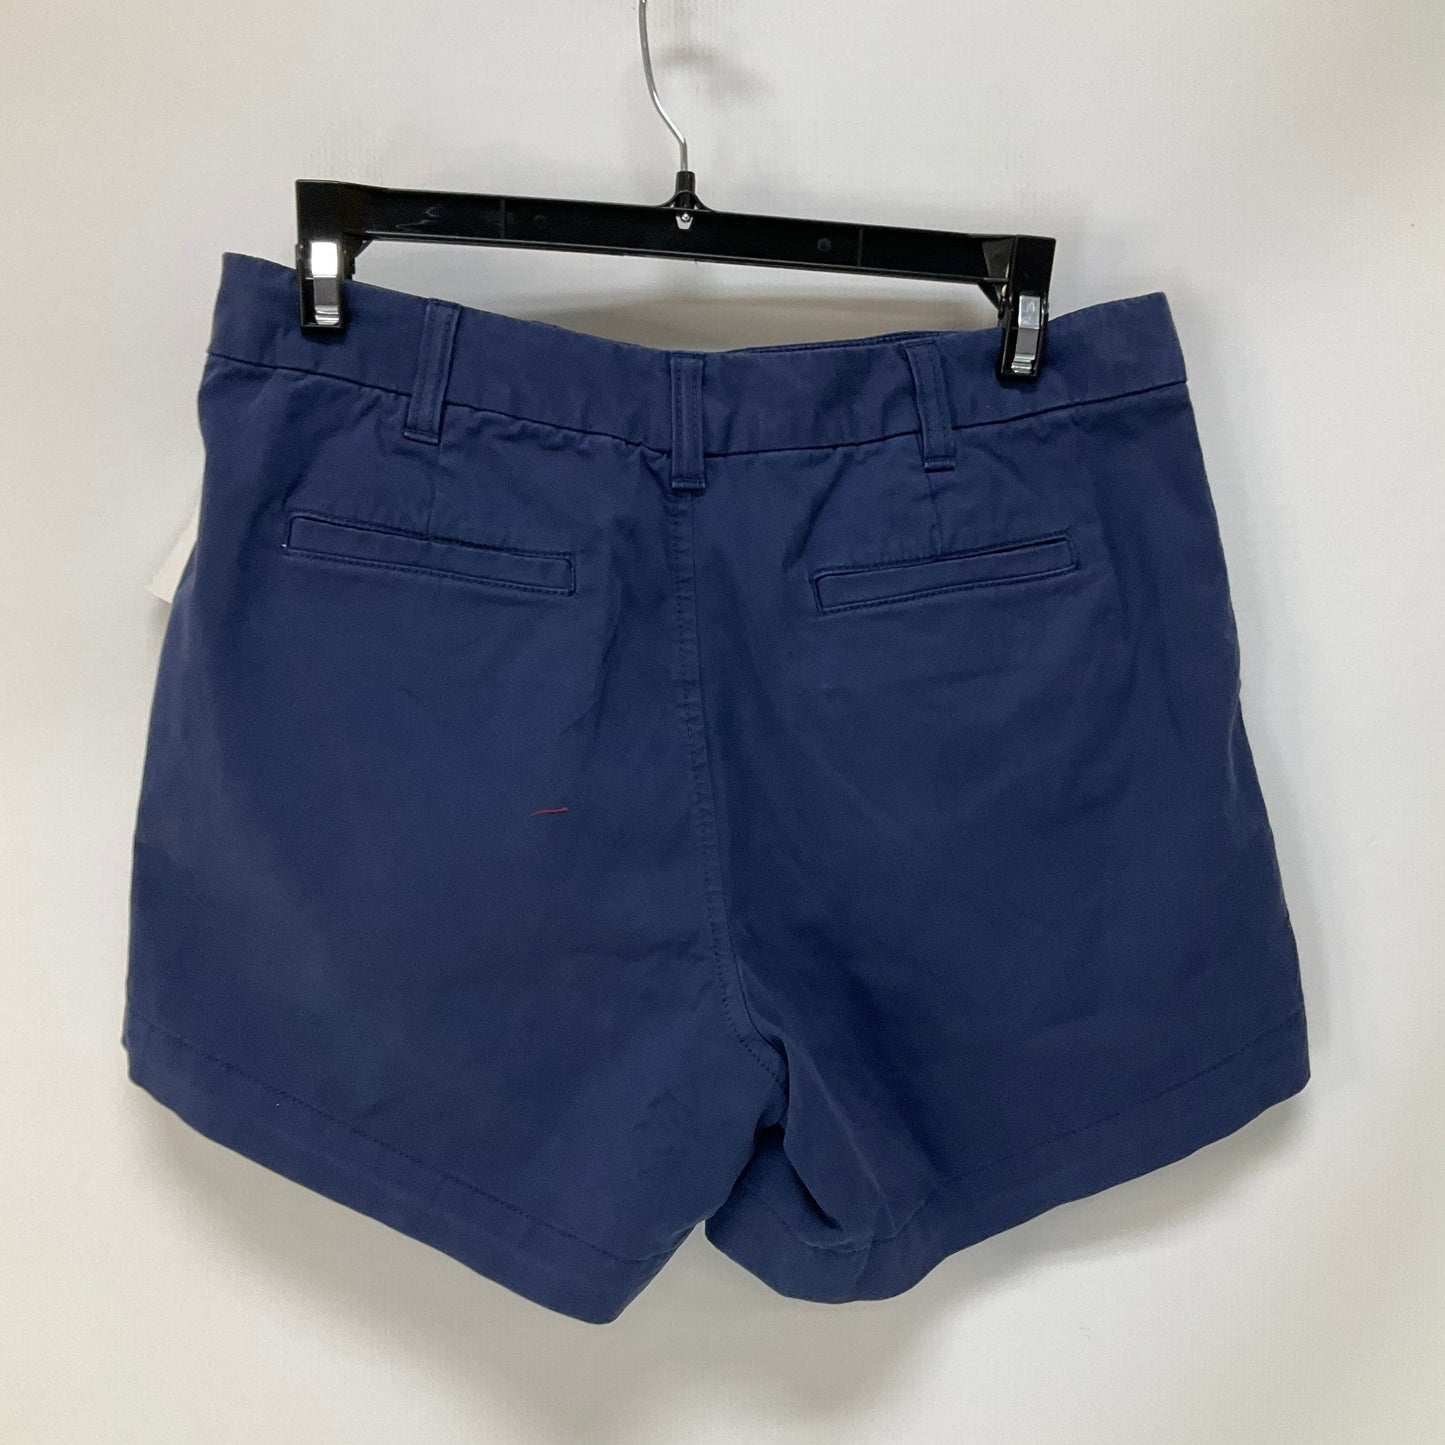 Navy Shorts Cmb, Size 2